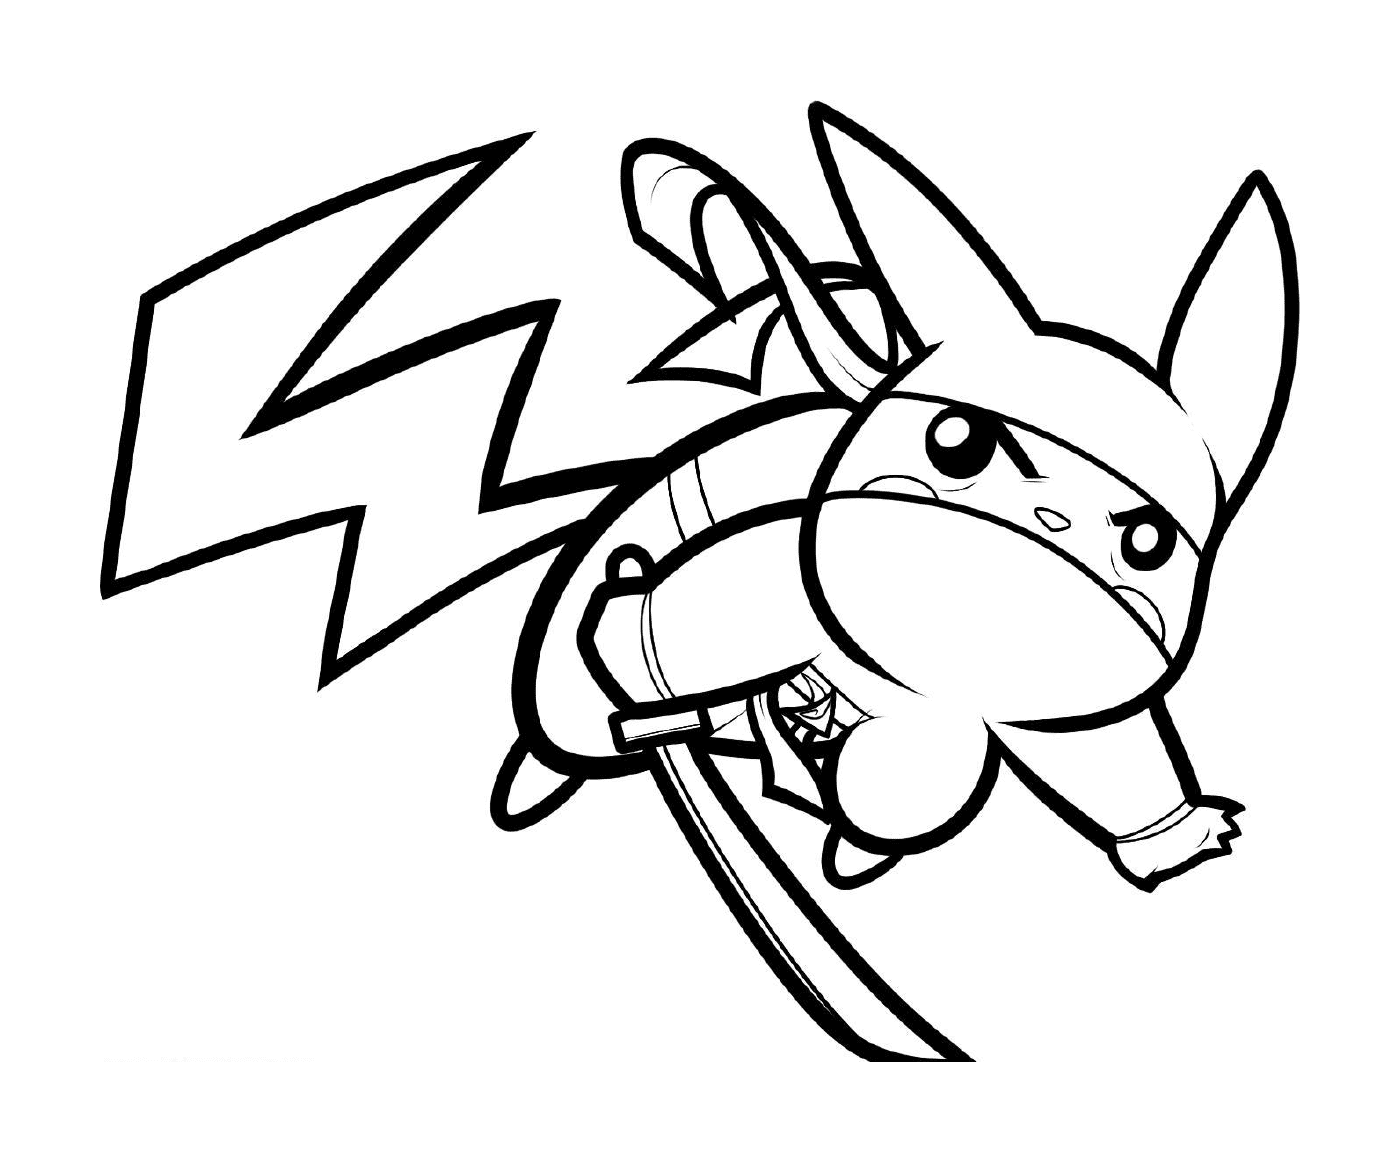  Pikachu, bösartige Ninja ausgestattet 